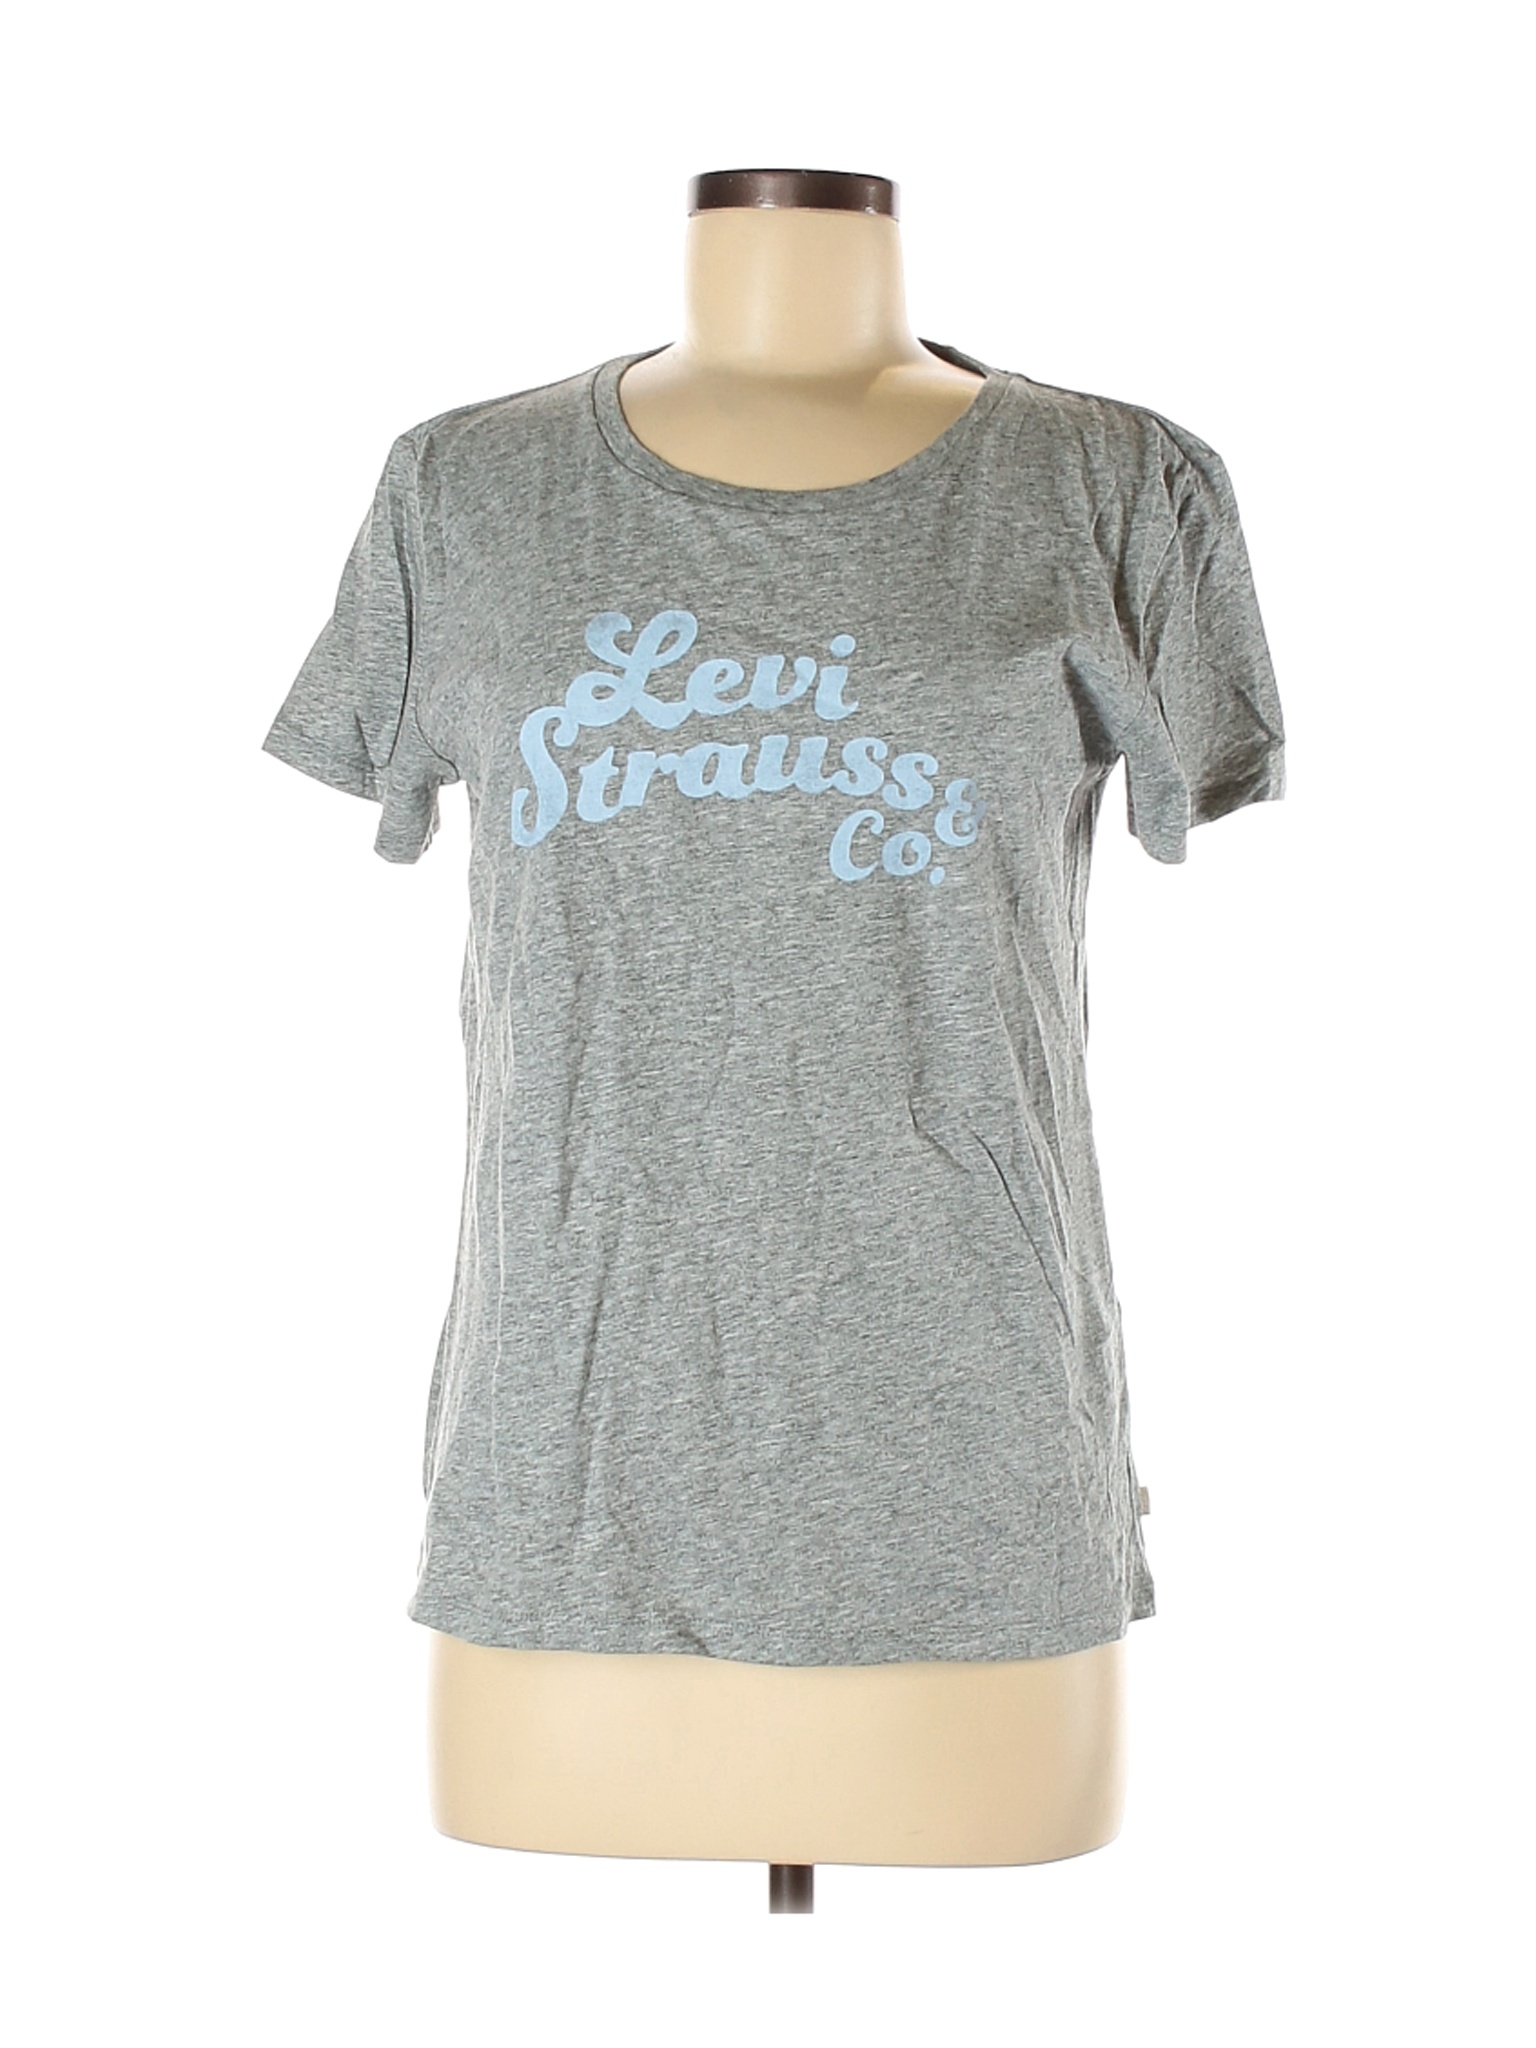 Levi's Women Gray Short Sleeve T-Shirt M | eBay